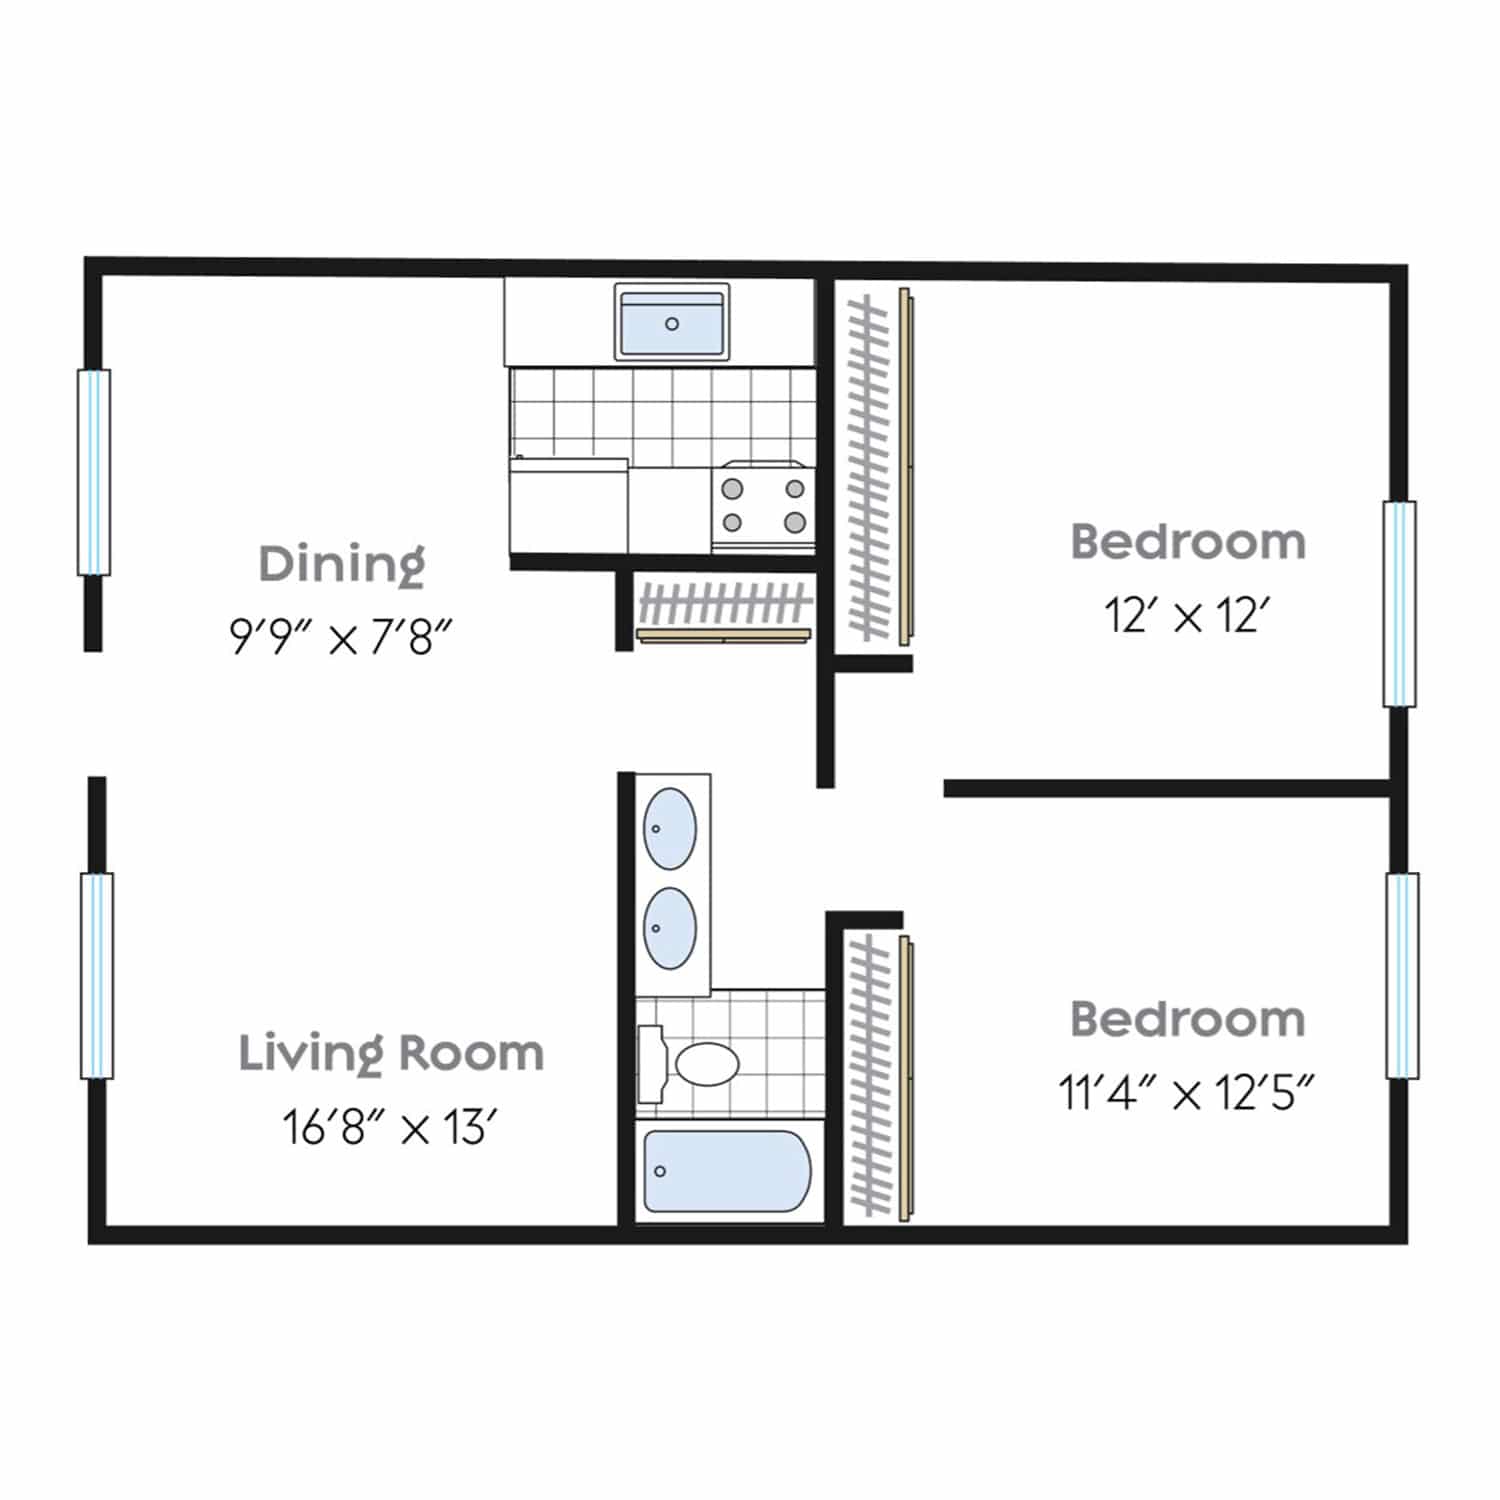 Two bedroom, one bathroom floor plan.